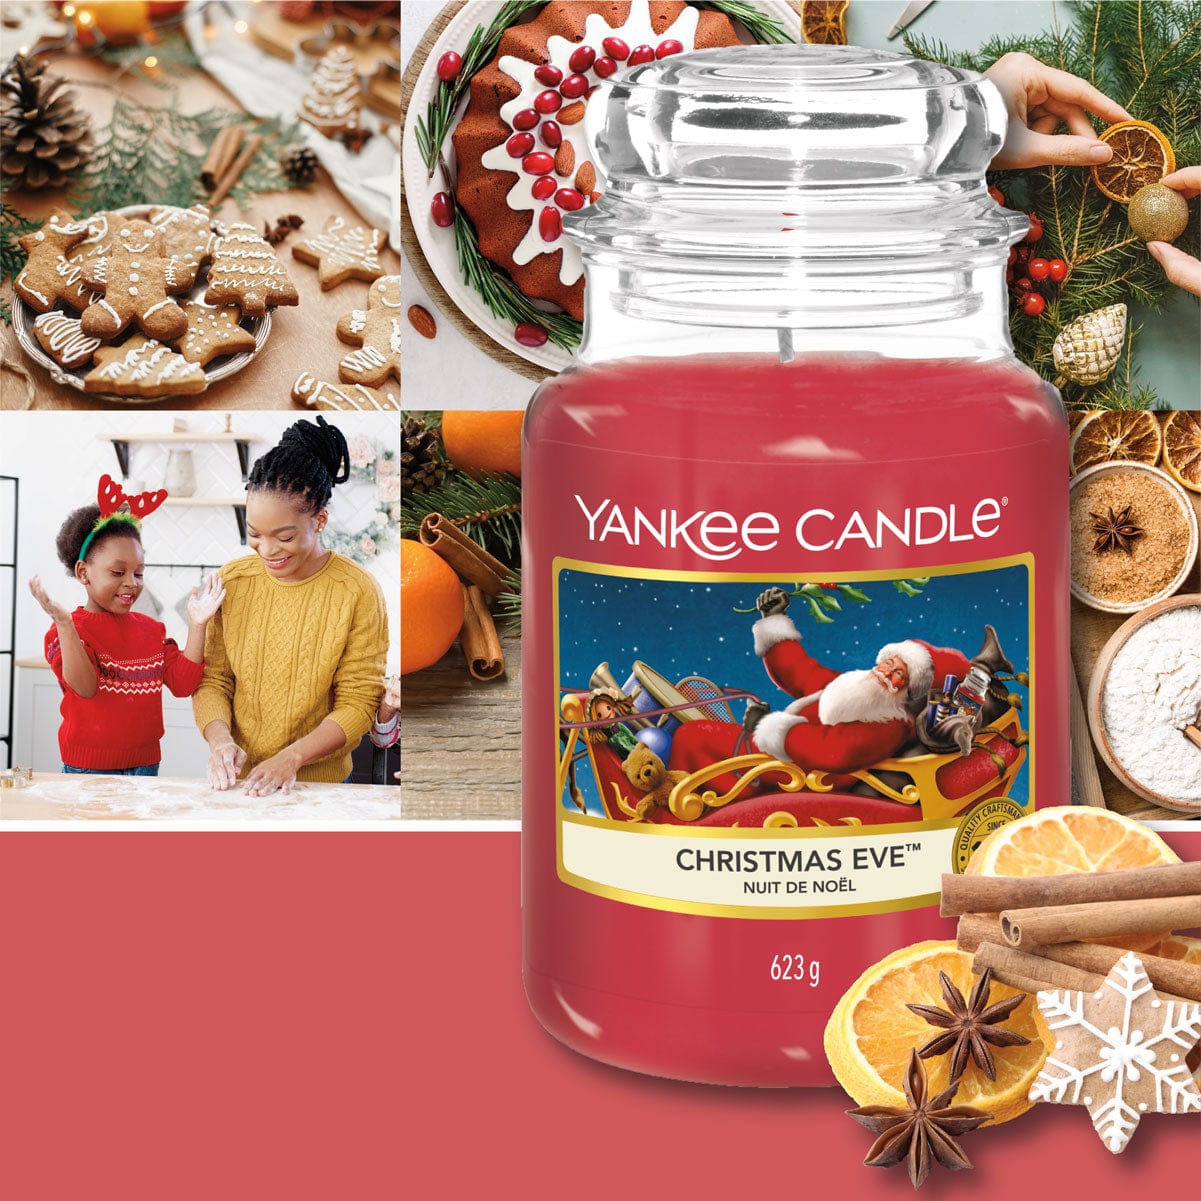 Christmas Eve Yankee Candle - Parfum Nuit de Noël